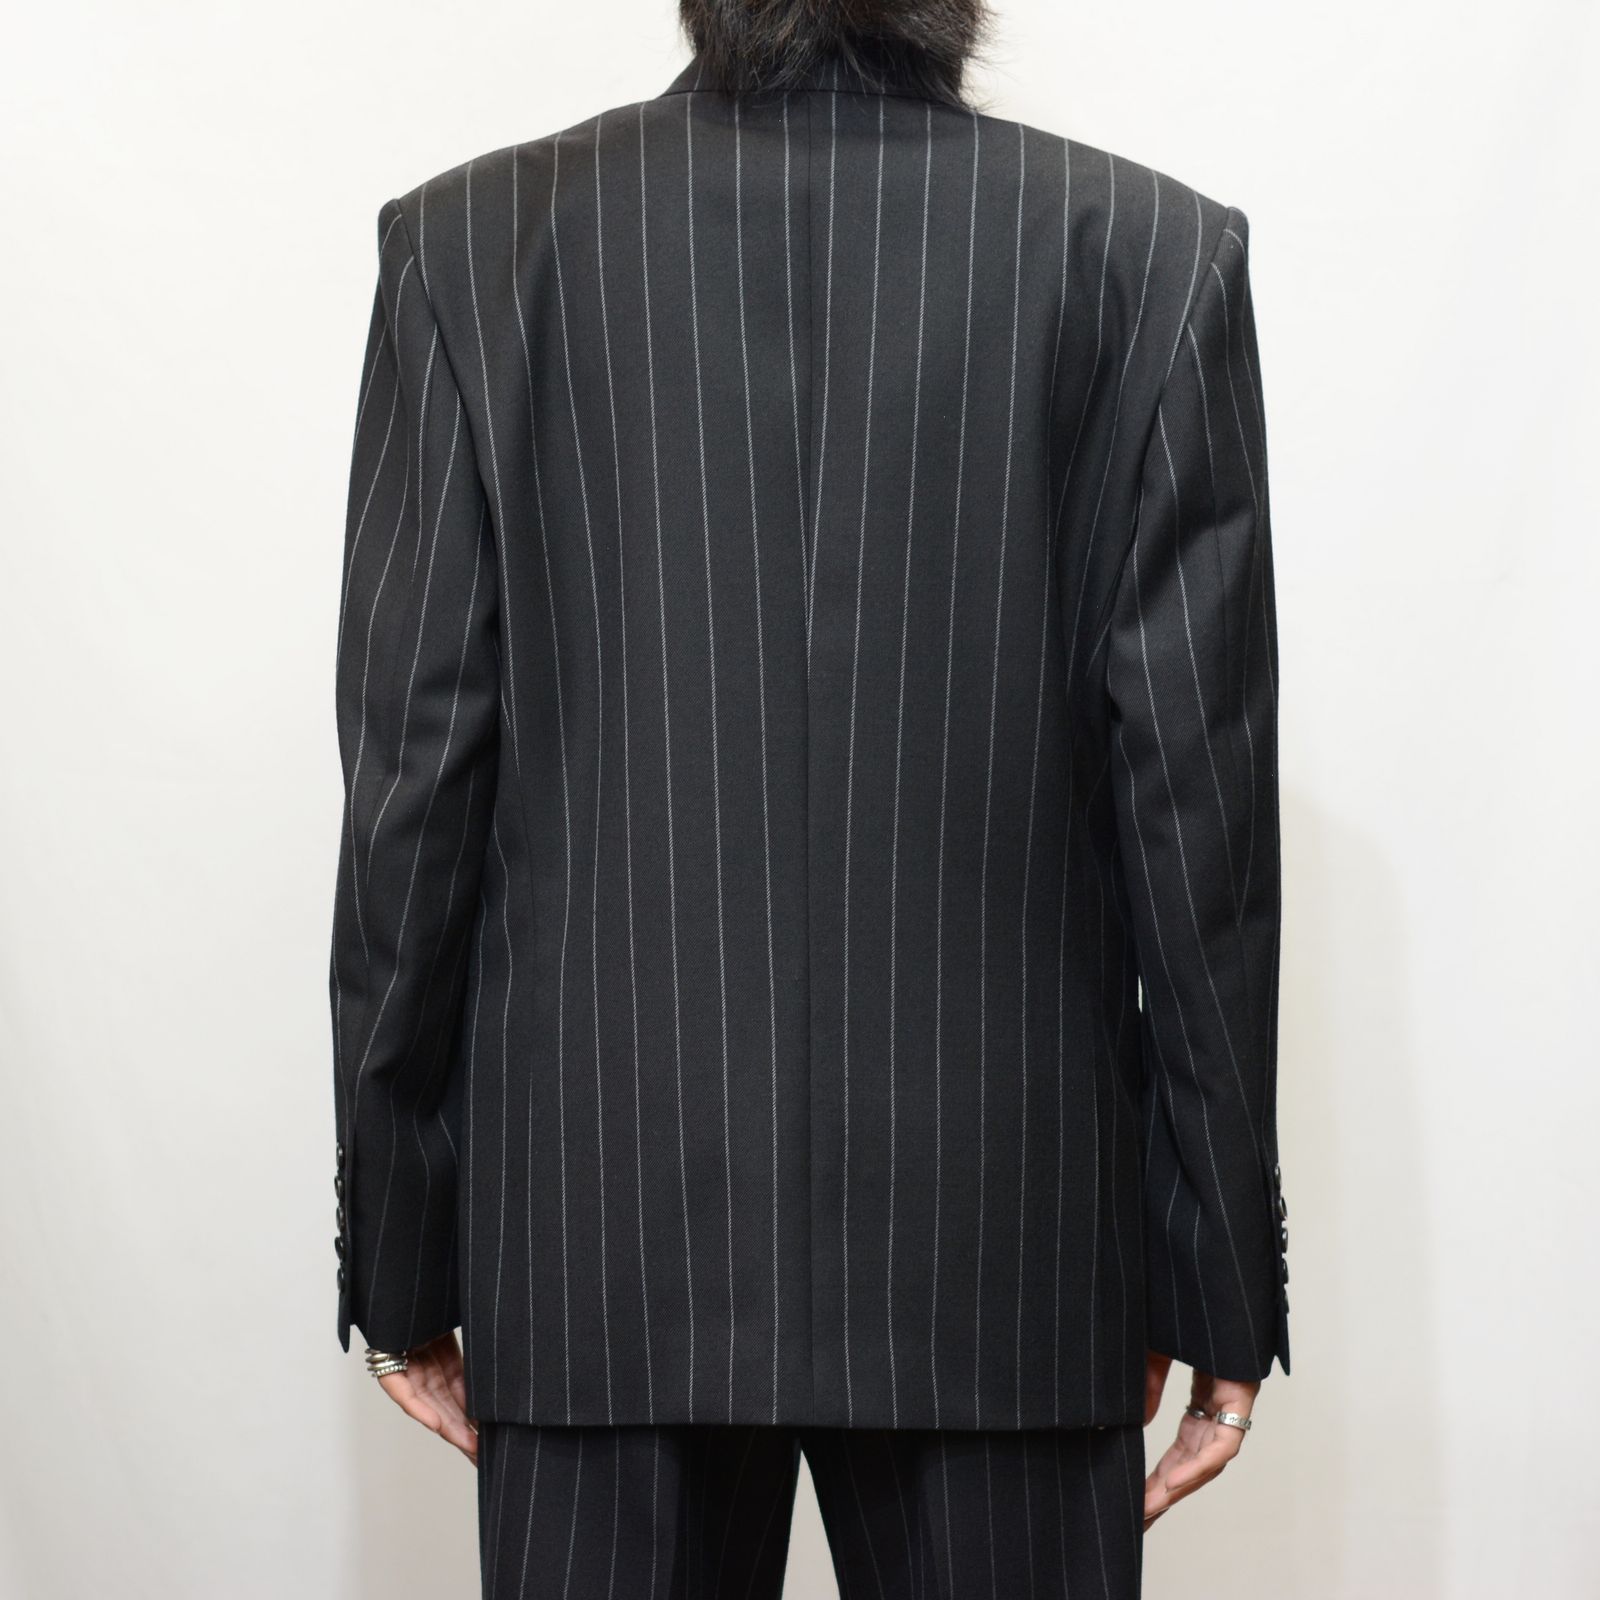 JOHNLAWRENCESULLIVAN - Wool stripe double breasted jacket